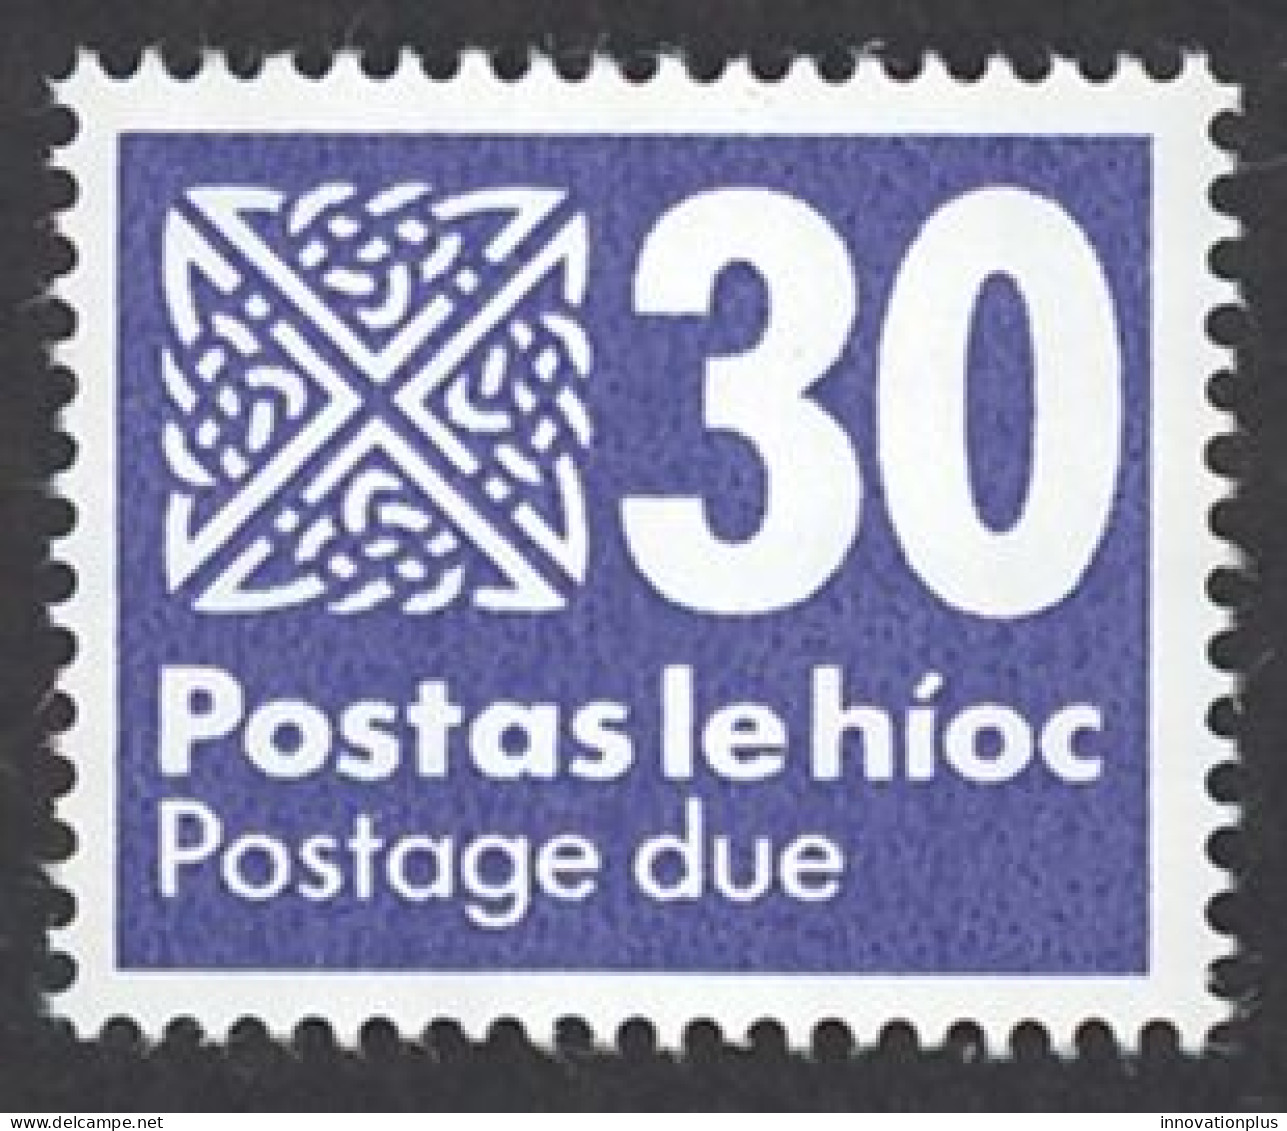 Ireland Sc# J35 MNH 1985 30p Postage Due - Strafport